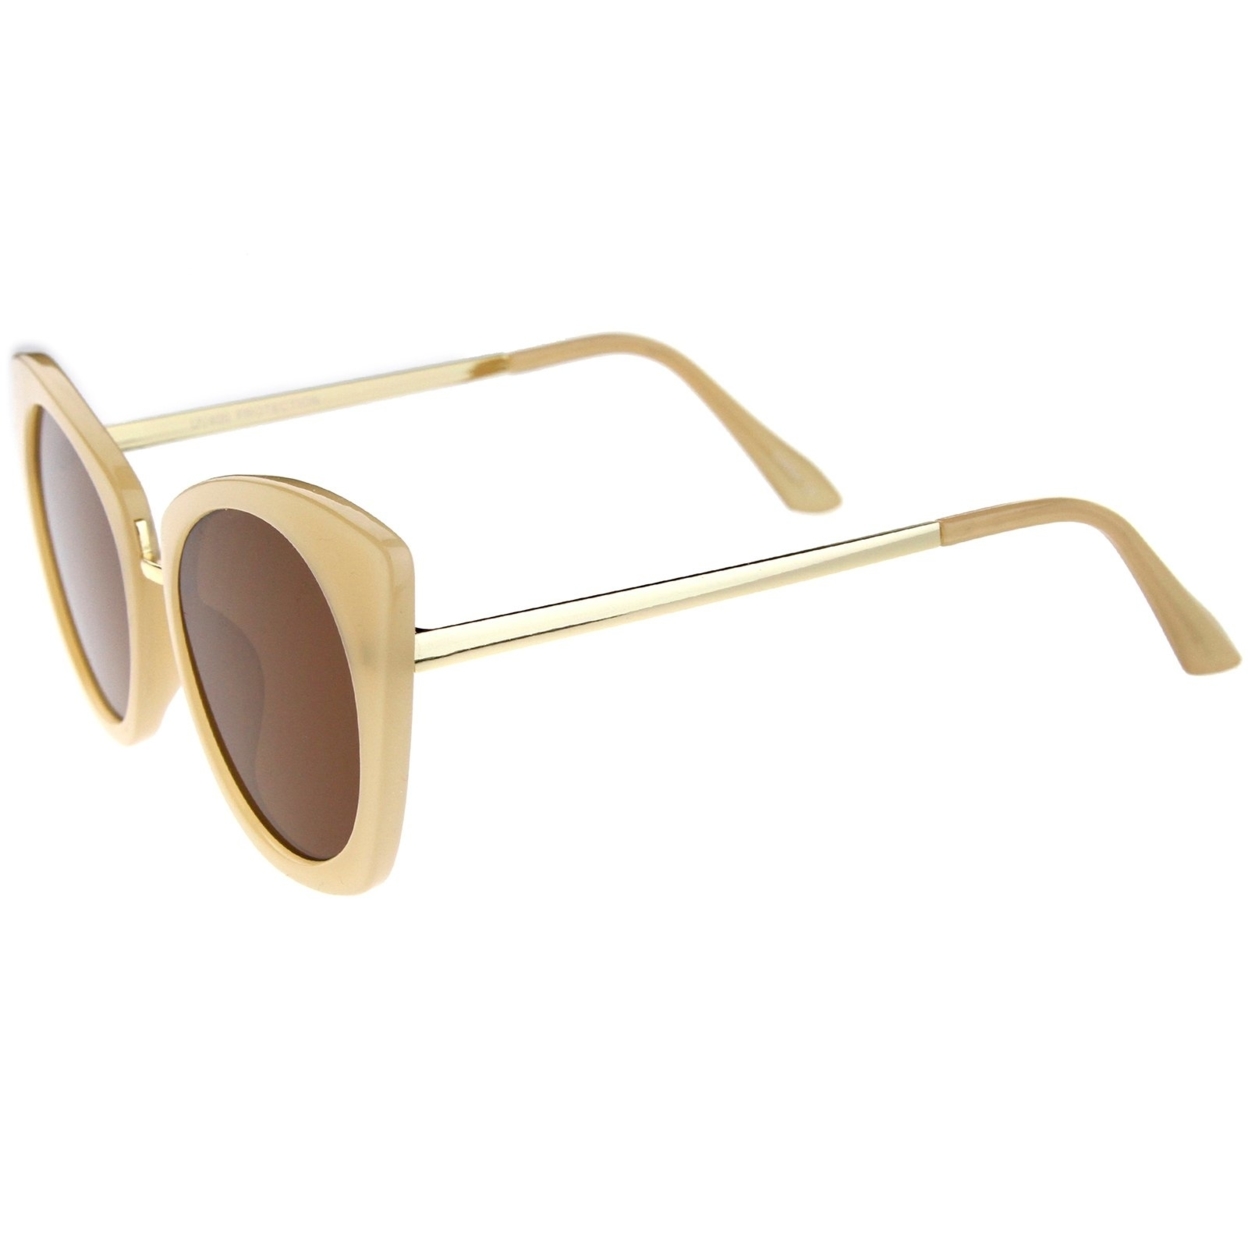 Women's Bold Frame Metal Temple Flat Lens Round Cat Eye Sunglasses 52mm - Creme-Gold / Brown